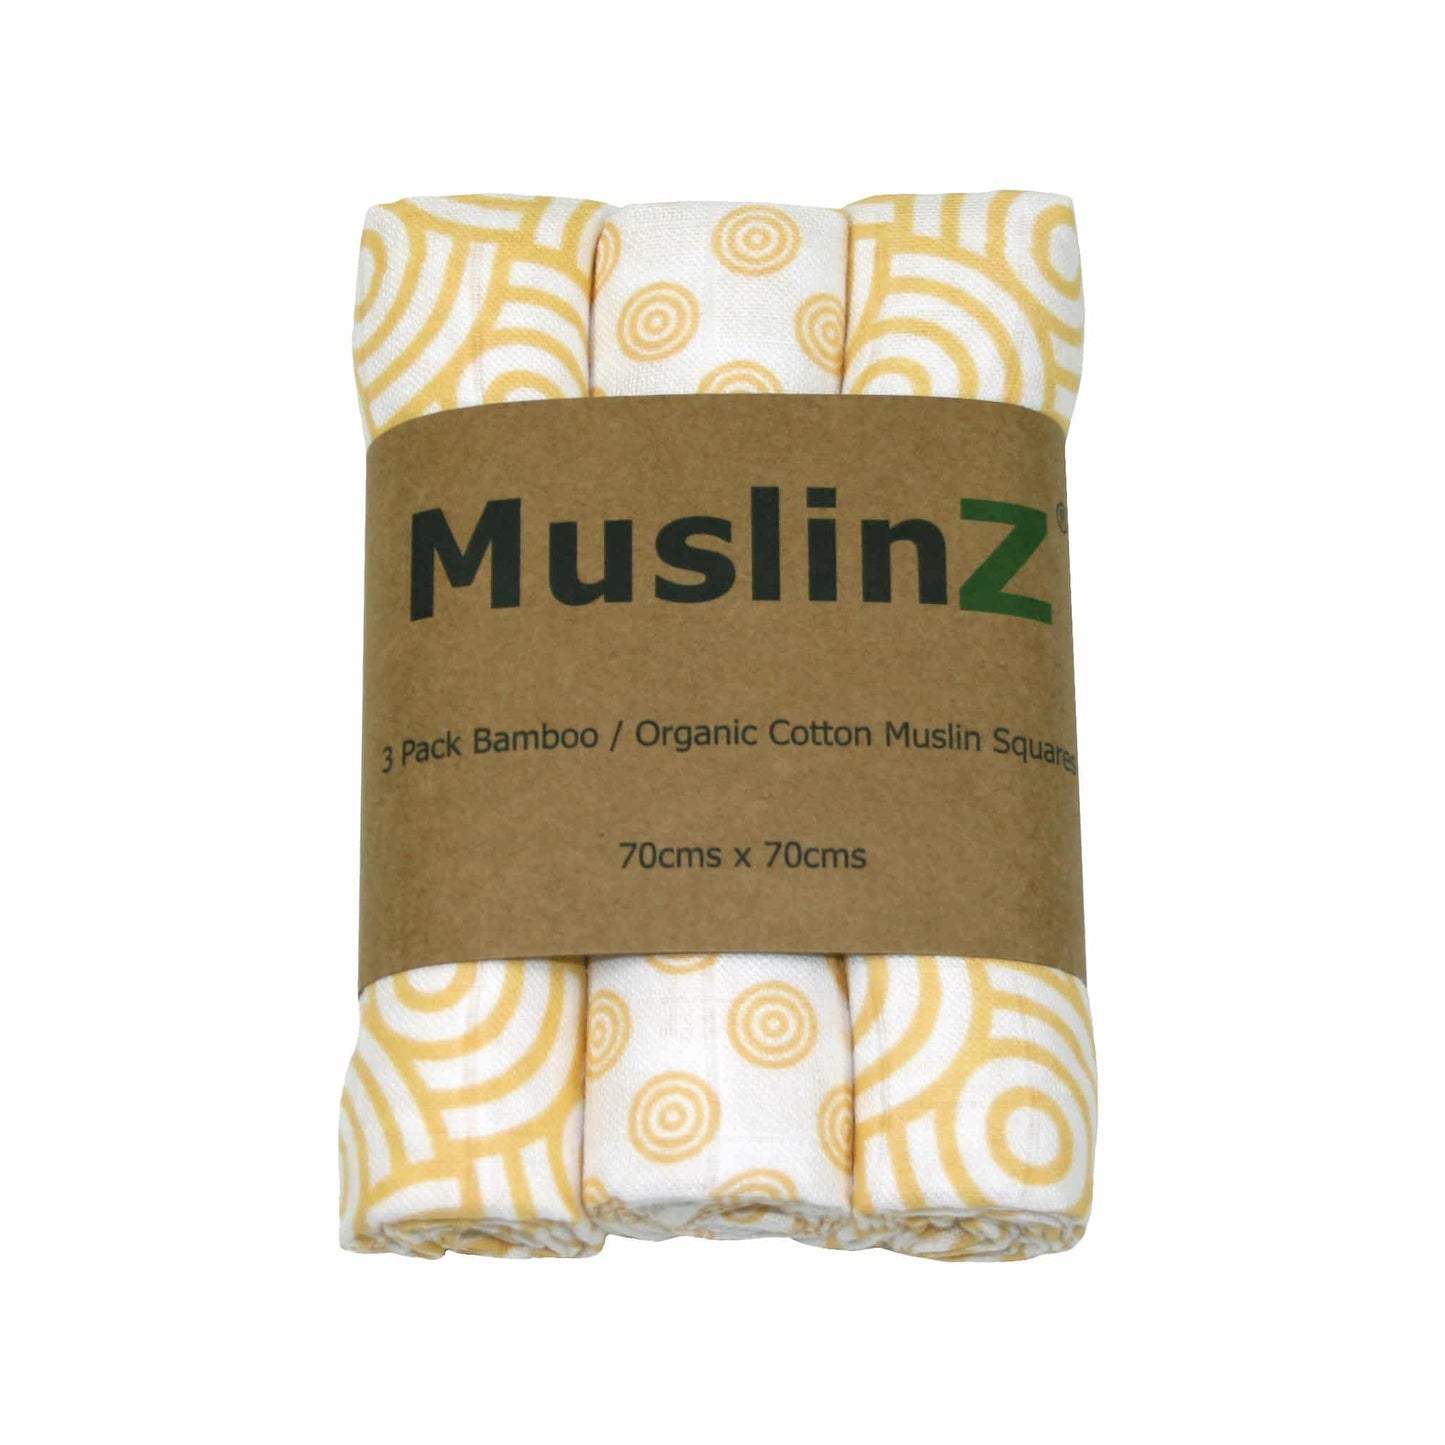 MuslinZ Bamboo/Organic Cotton Muslin Square Gold Swirls